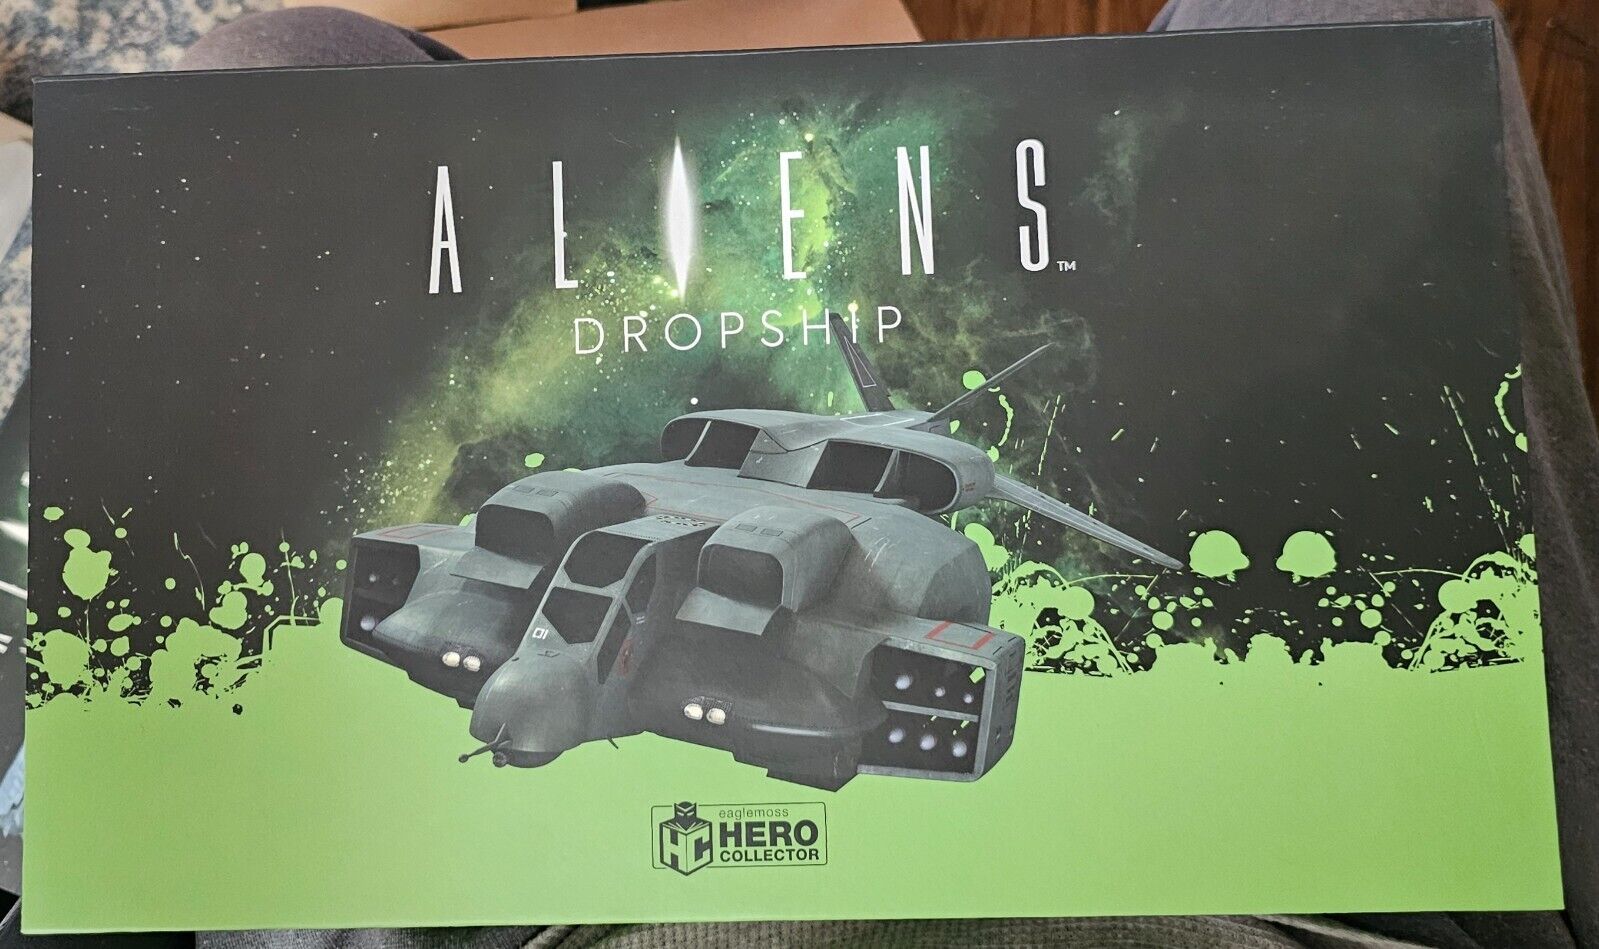 Dropship Alien  XL Die Cast ship Eaglemoss new in box